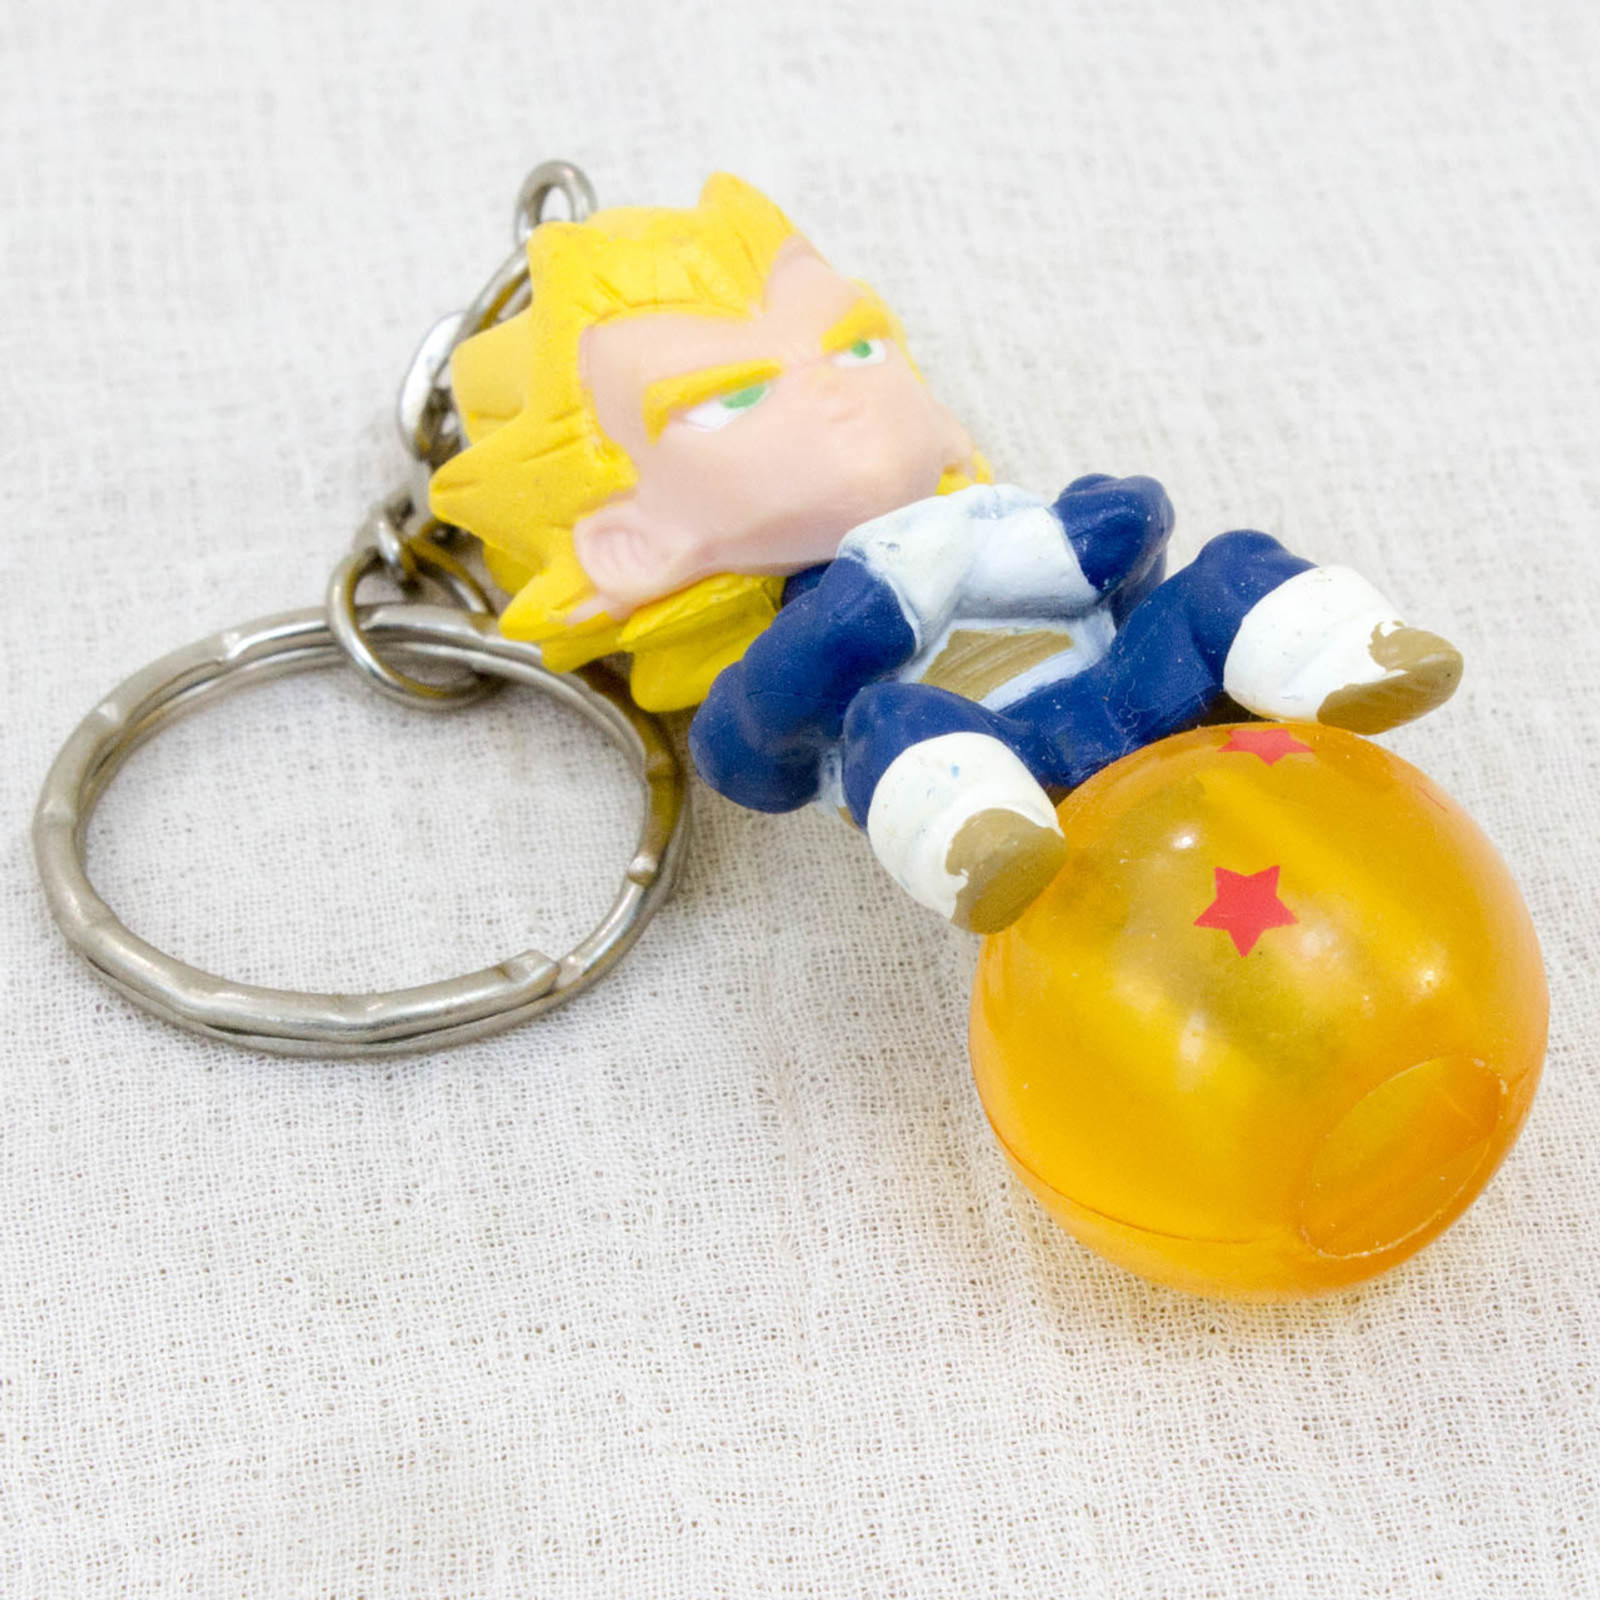 Dragon Ball Z Super Saiyan Vegeta Chara Petit Figure Key Chain JAPAN ANIME MANGA